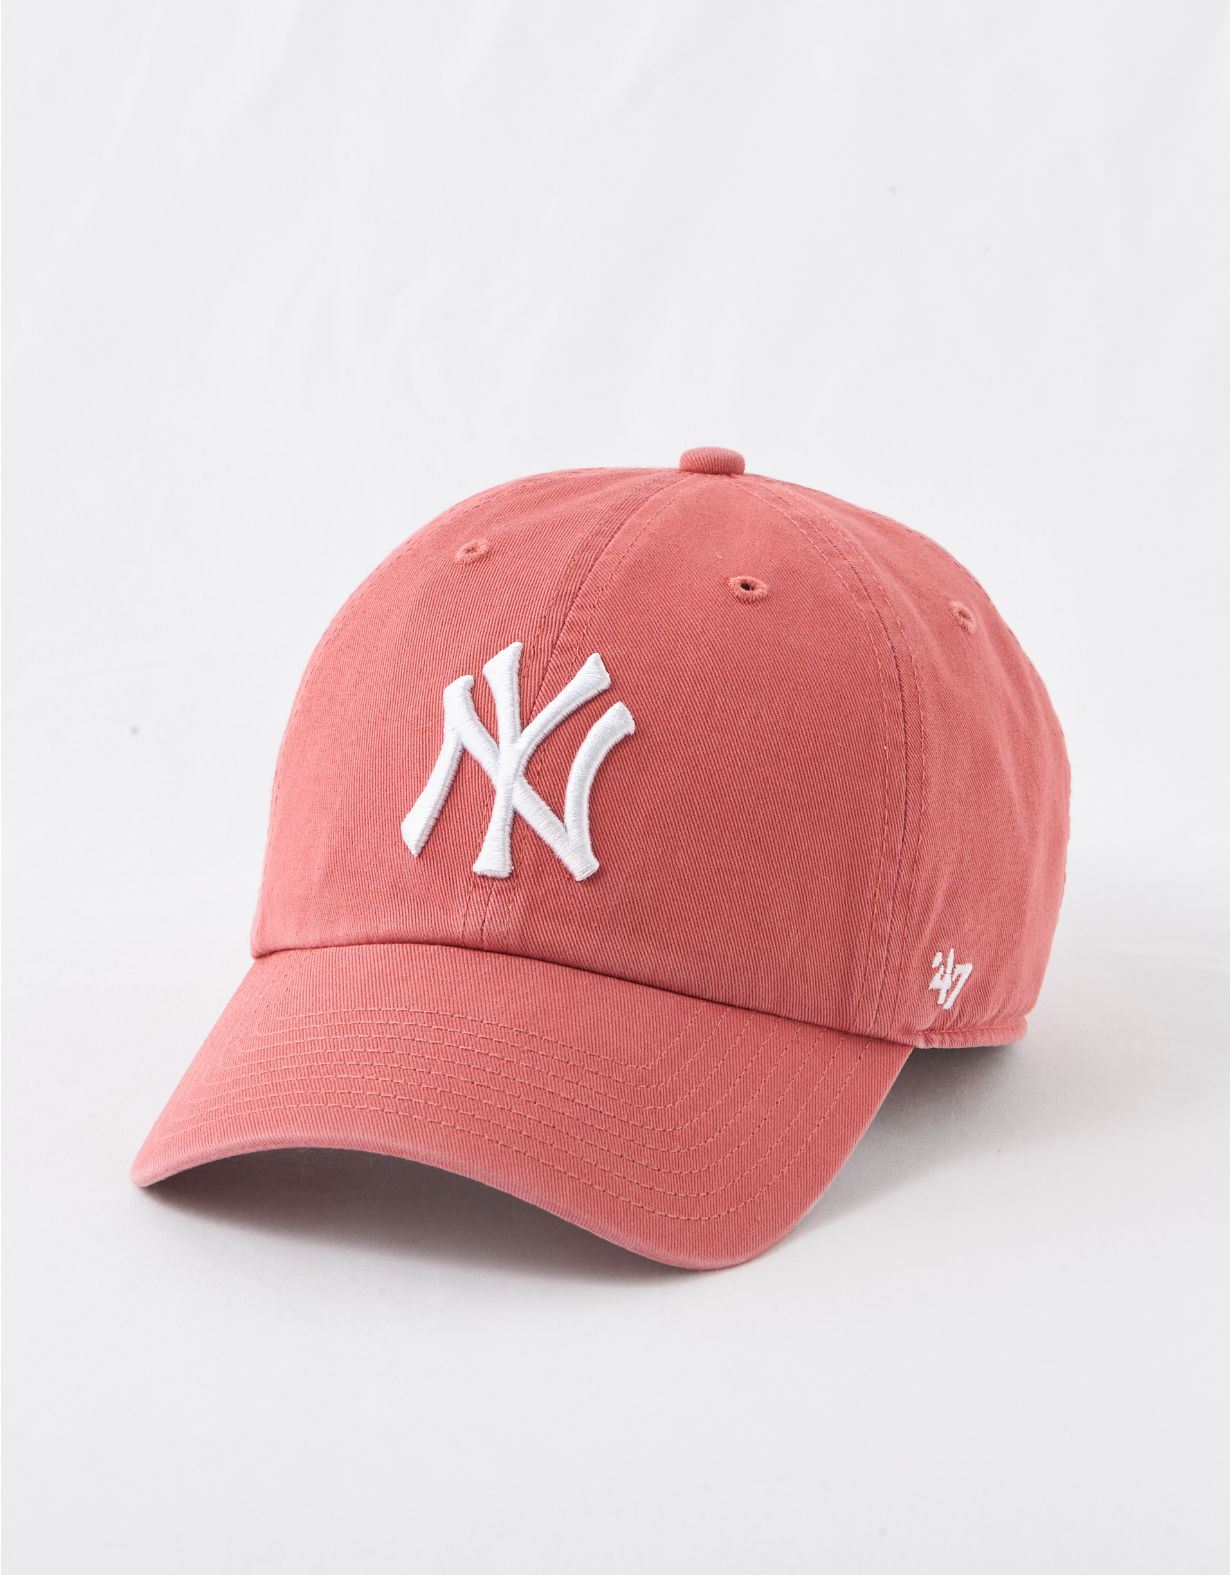 '47 New York Yankees Baseball Hat